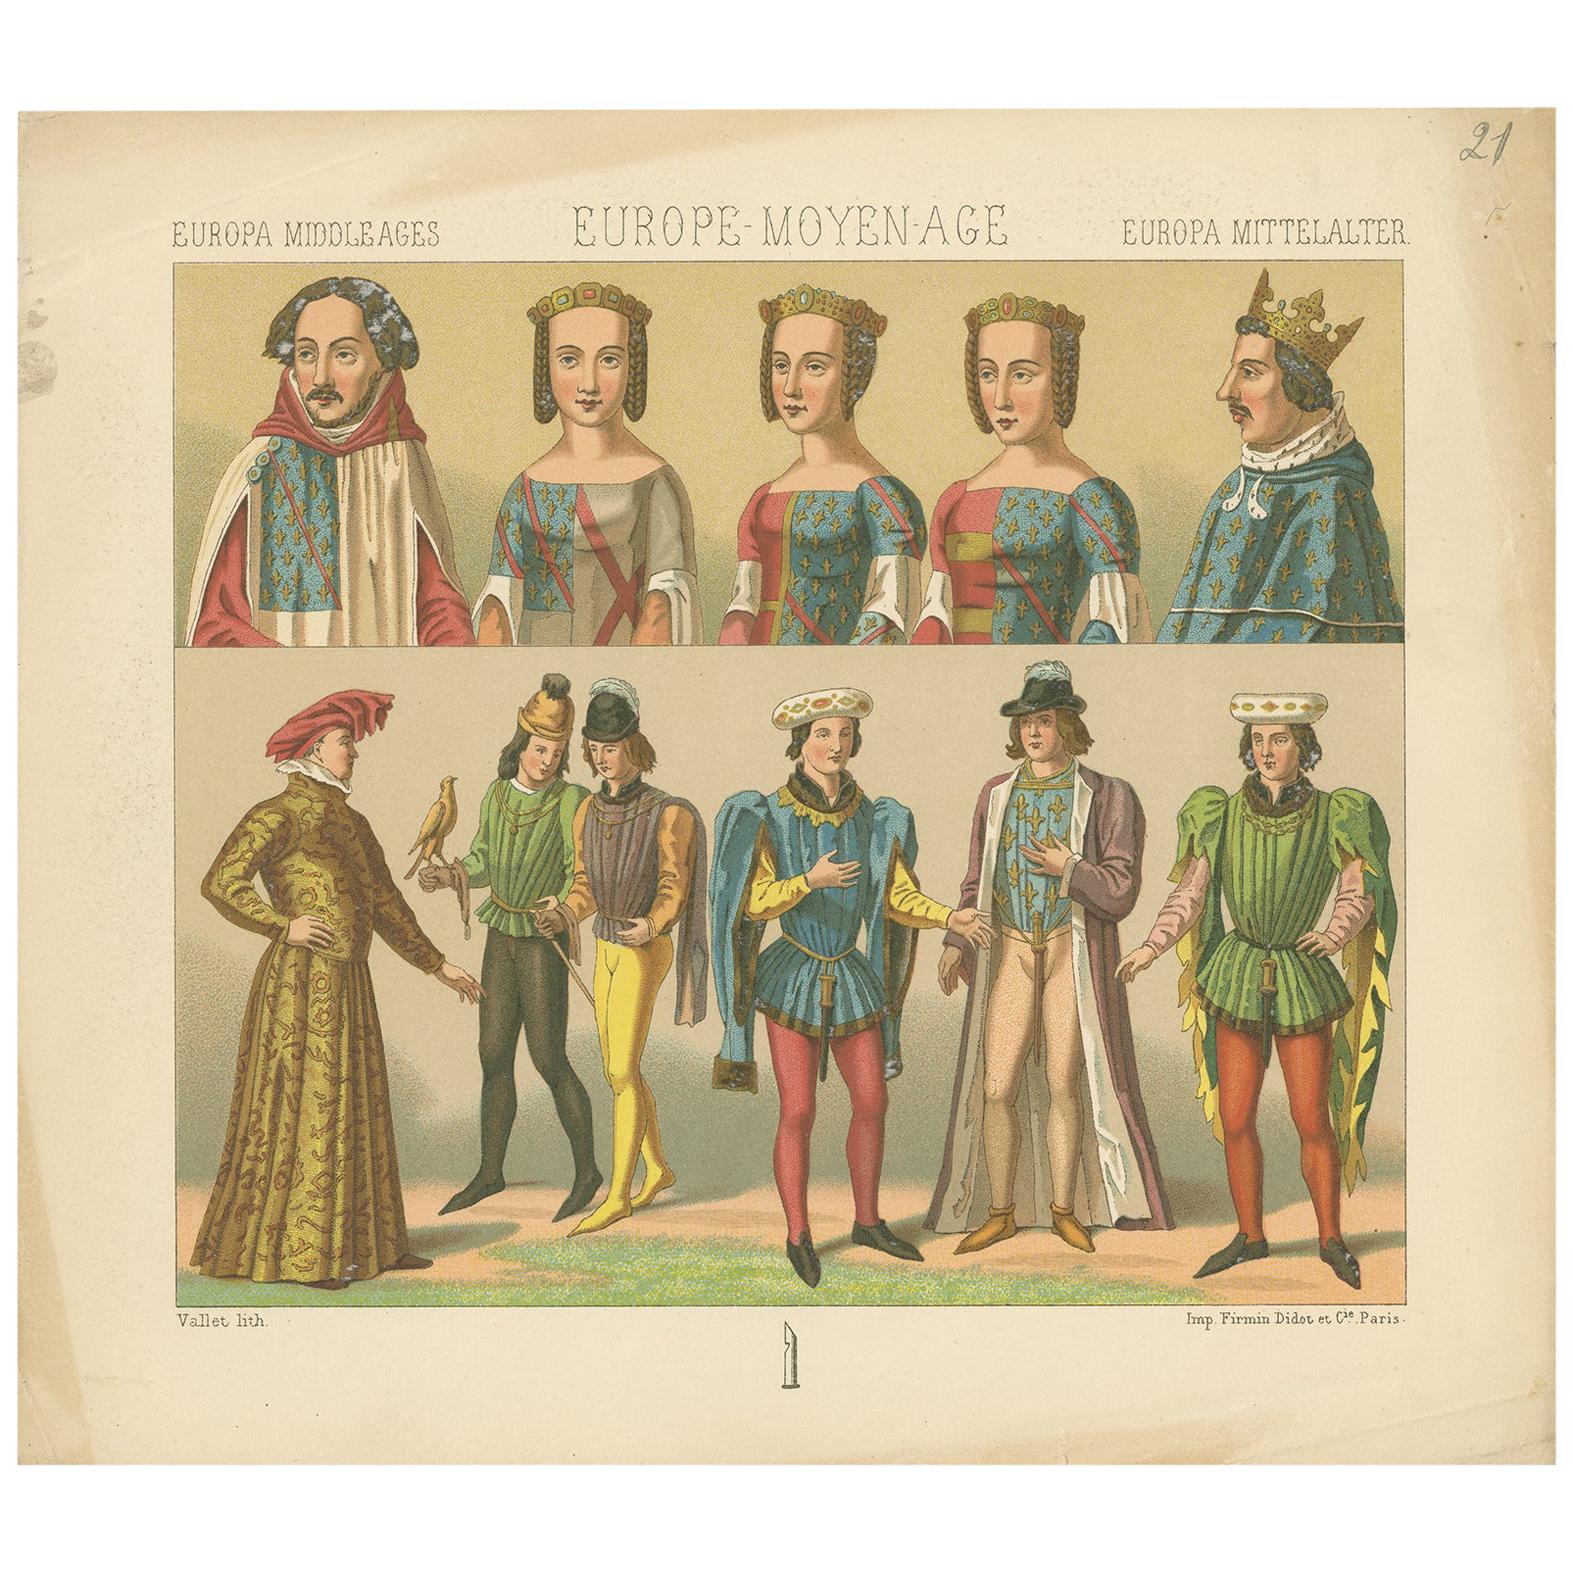 14 век эпоха. Англия 15 век одежда. Европа 15 век одежда. 13 Век Европа одежда. Мода 13 века во Франции.